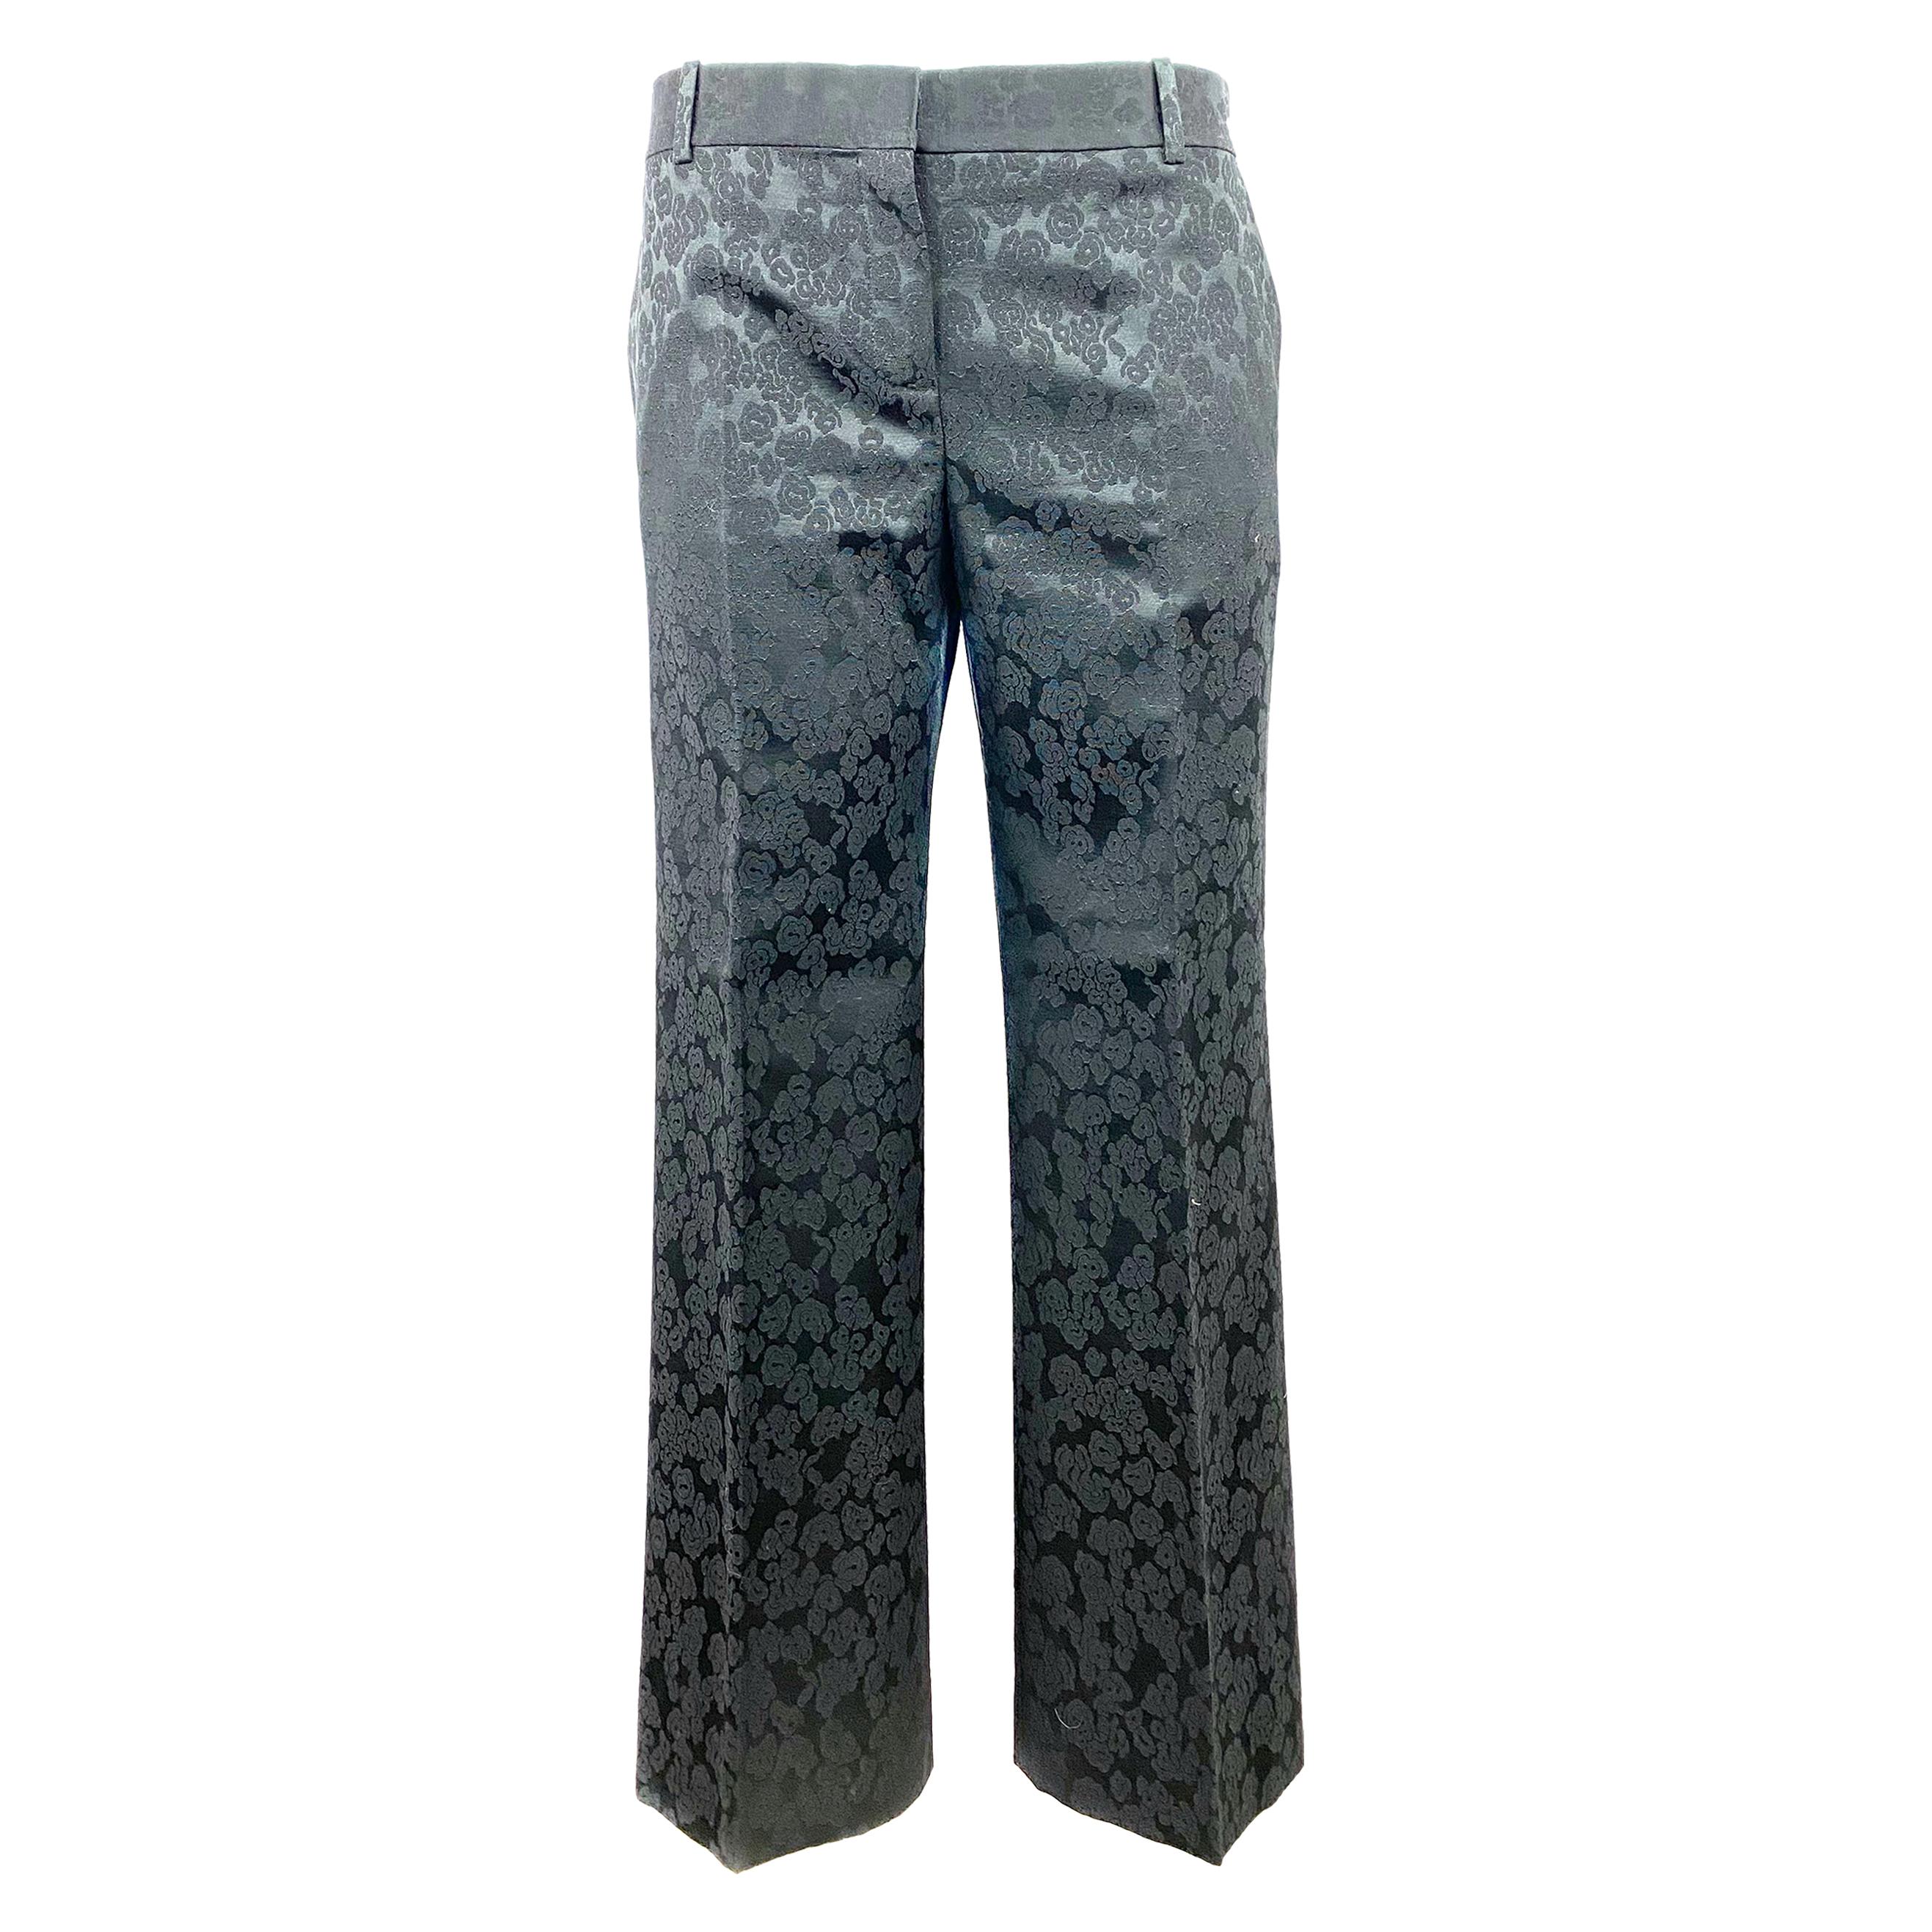 CELINE Black w/ Floral Print Straight Trousers Pants Size 38